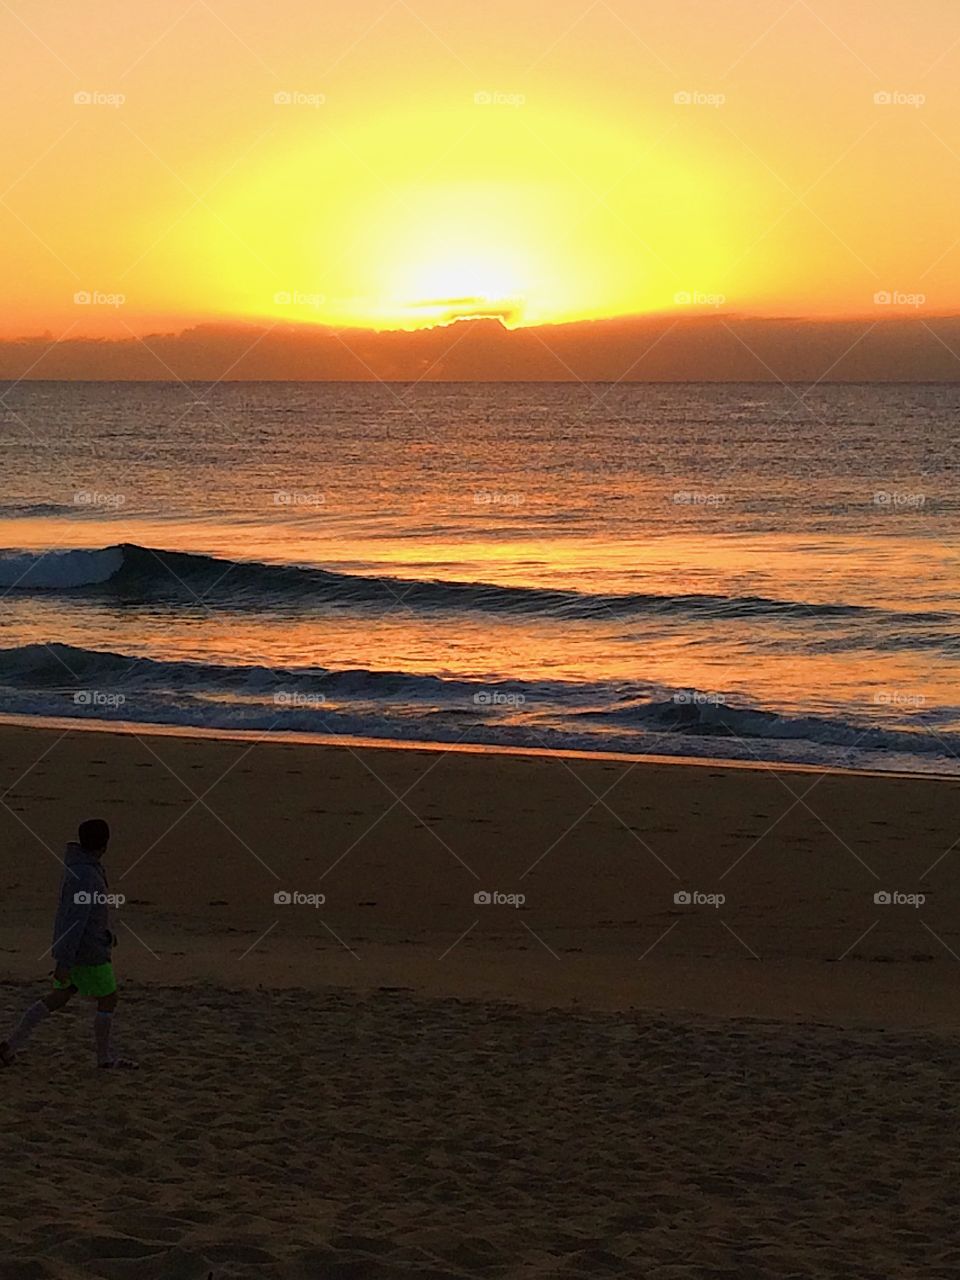 Sunrise over the ocean waves 